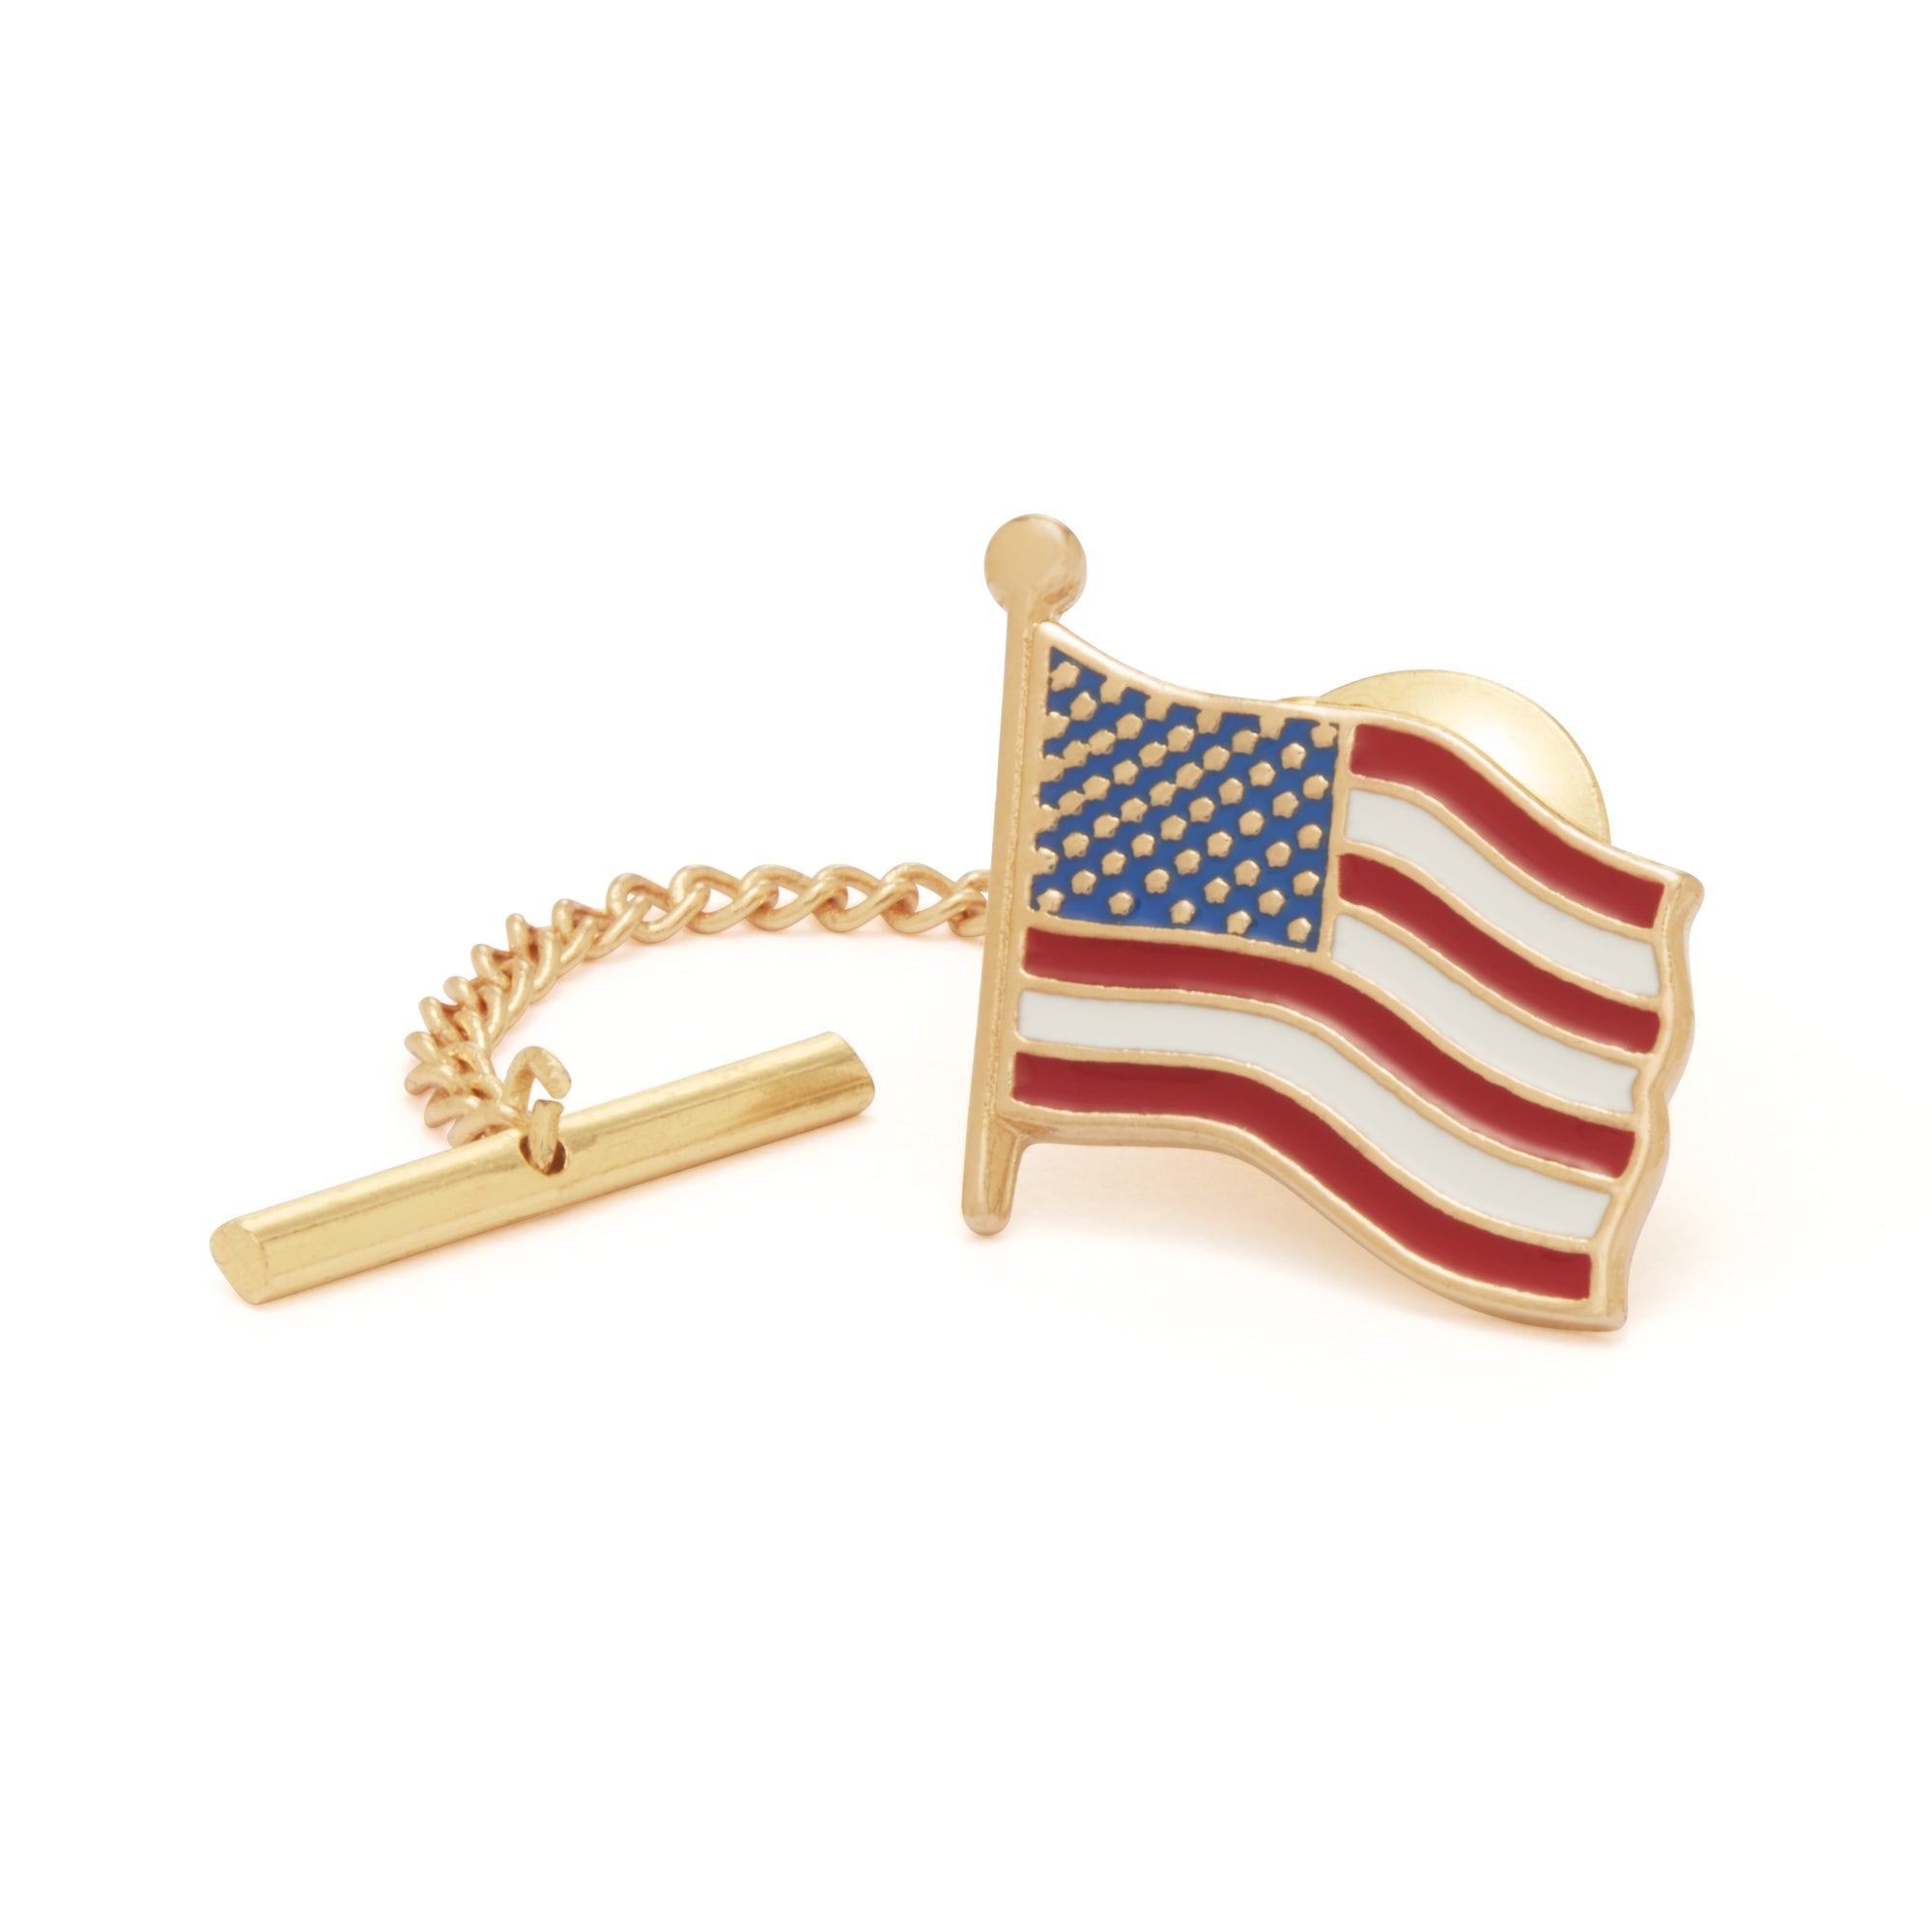 Patriotic Gold and Silver Tone American Flag Tie Tack